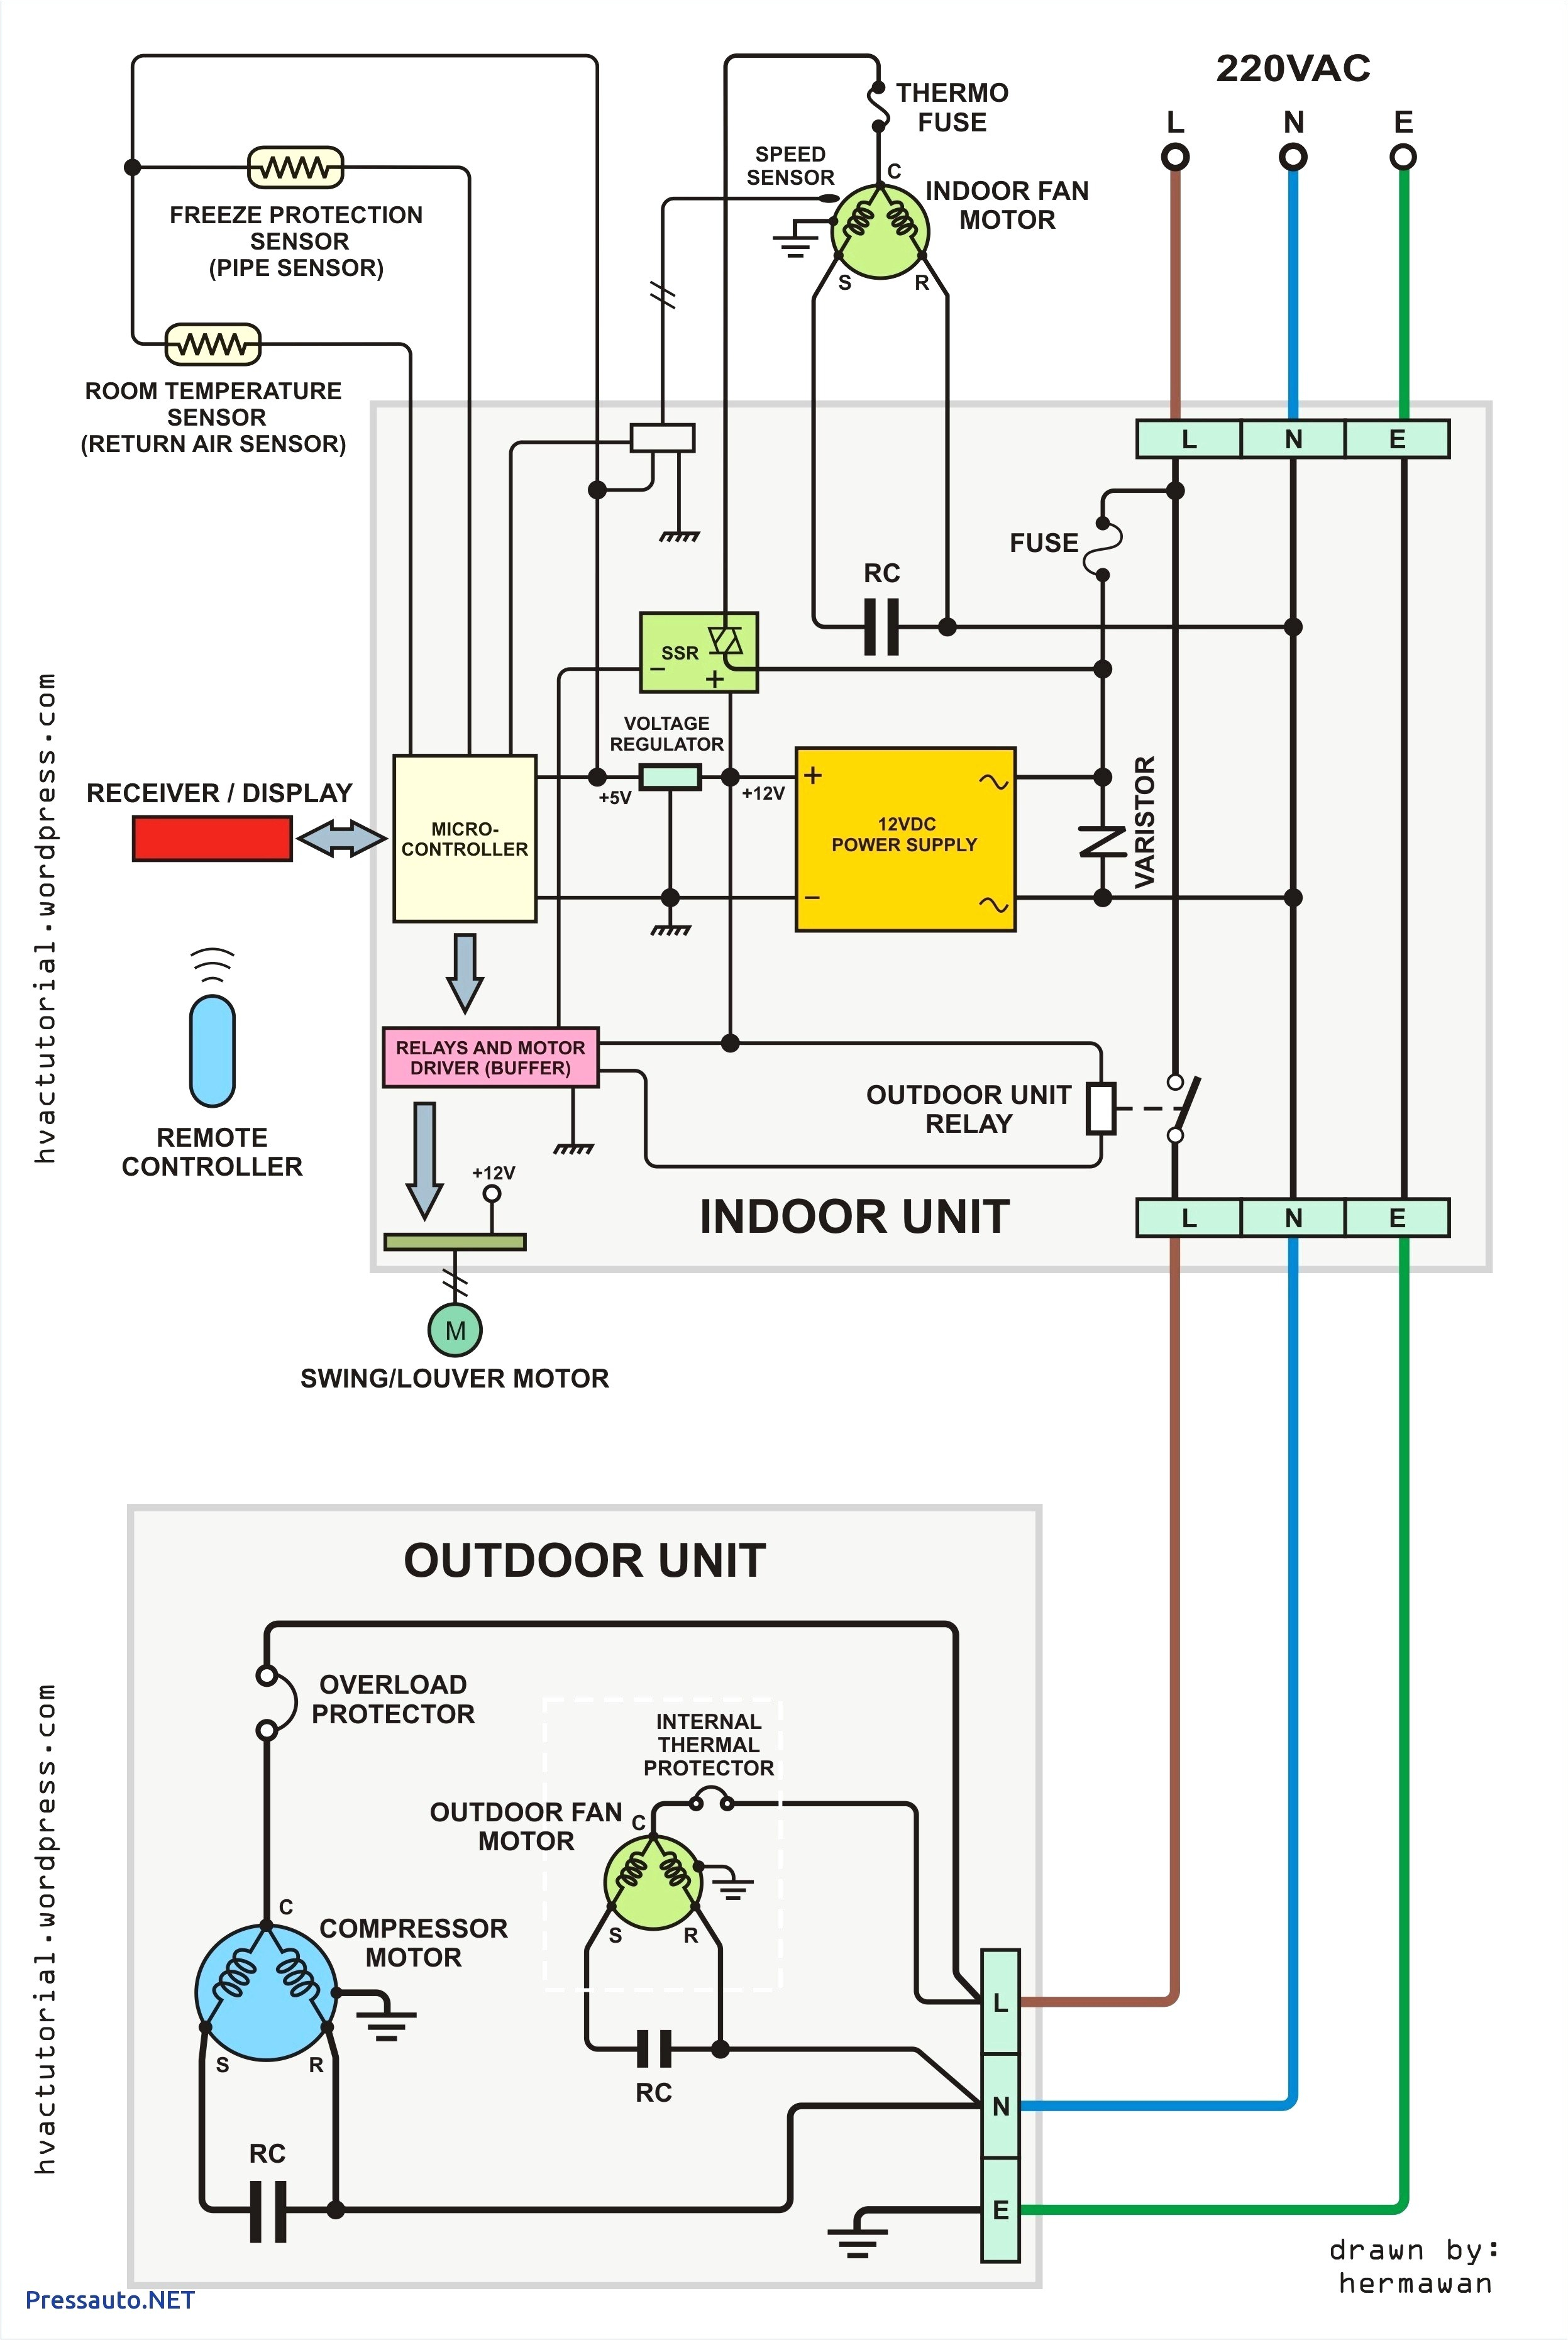 flagstaff camper wiring diagram wiring diagram toolbox forest river rockwood wiring diagram forest river flagstaff wiring